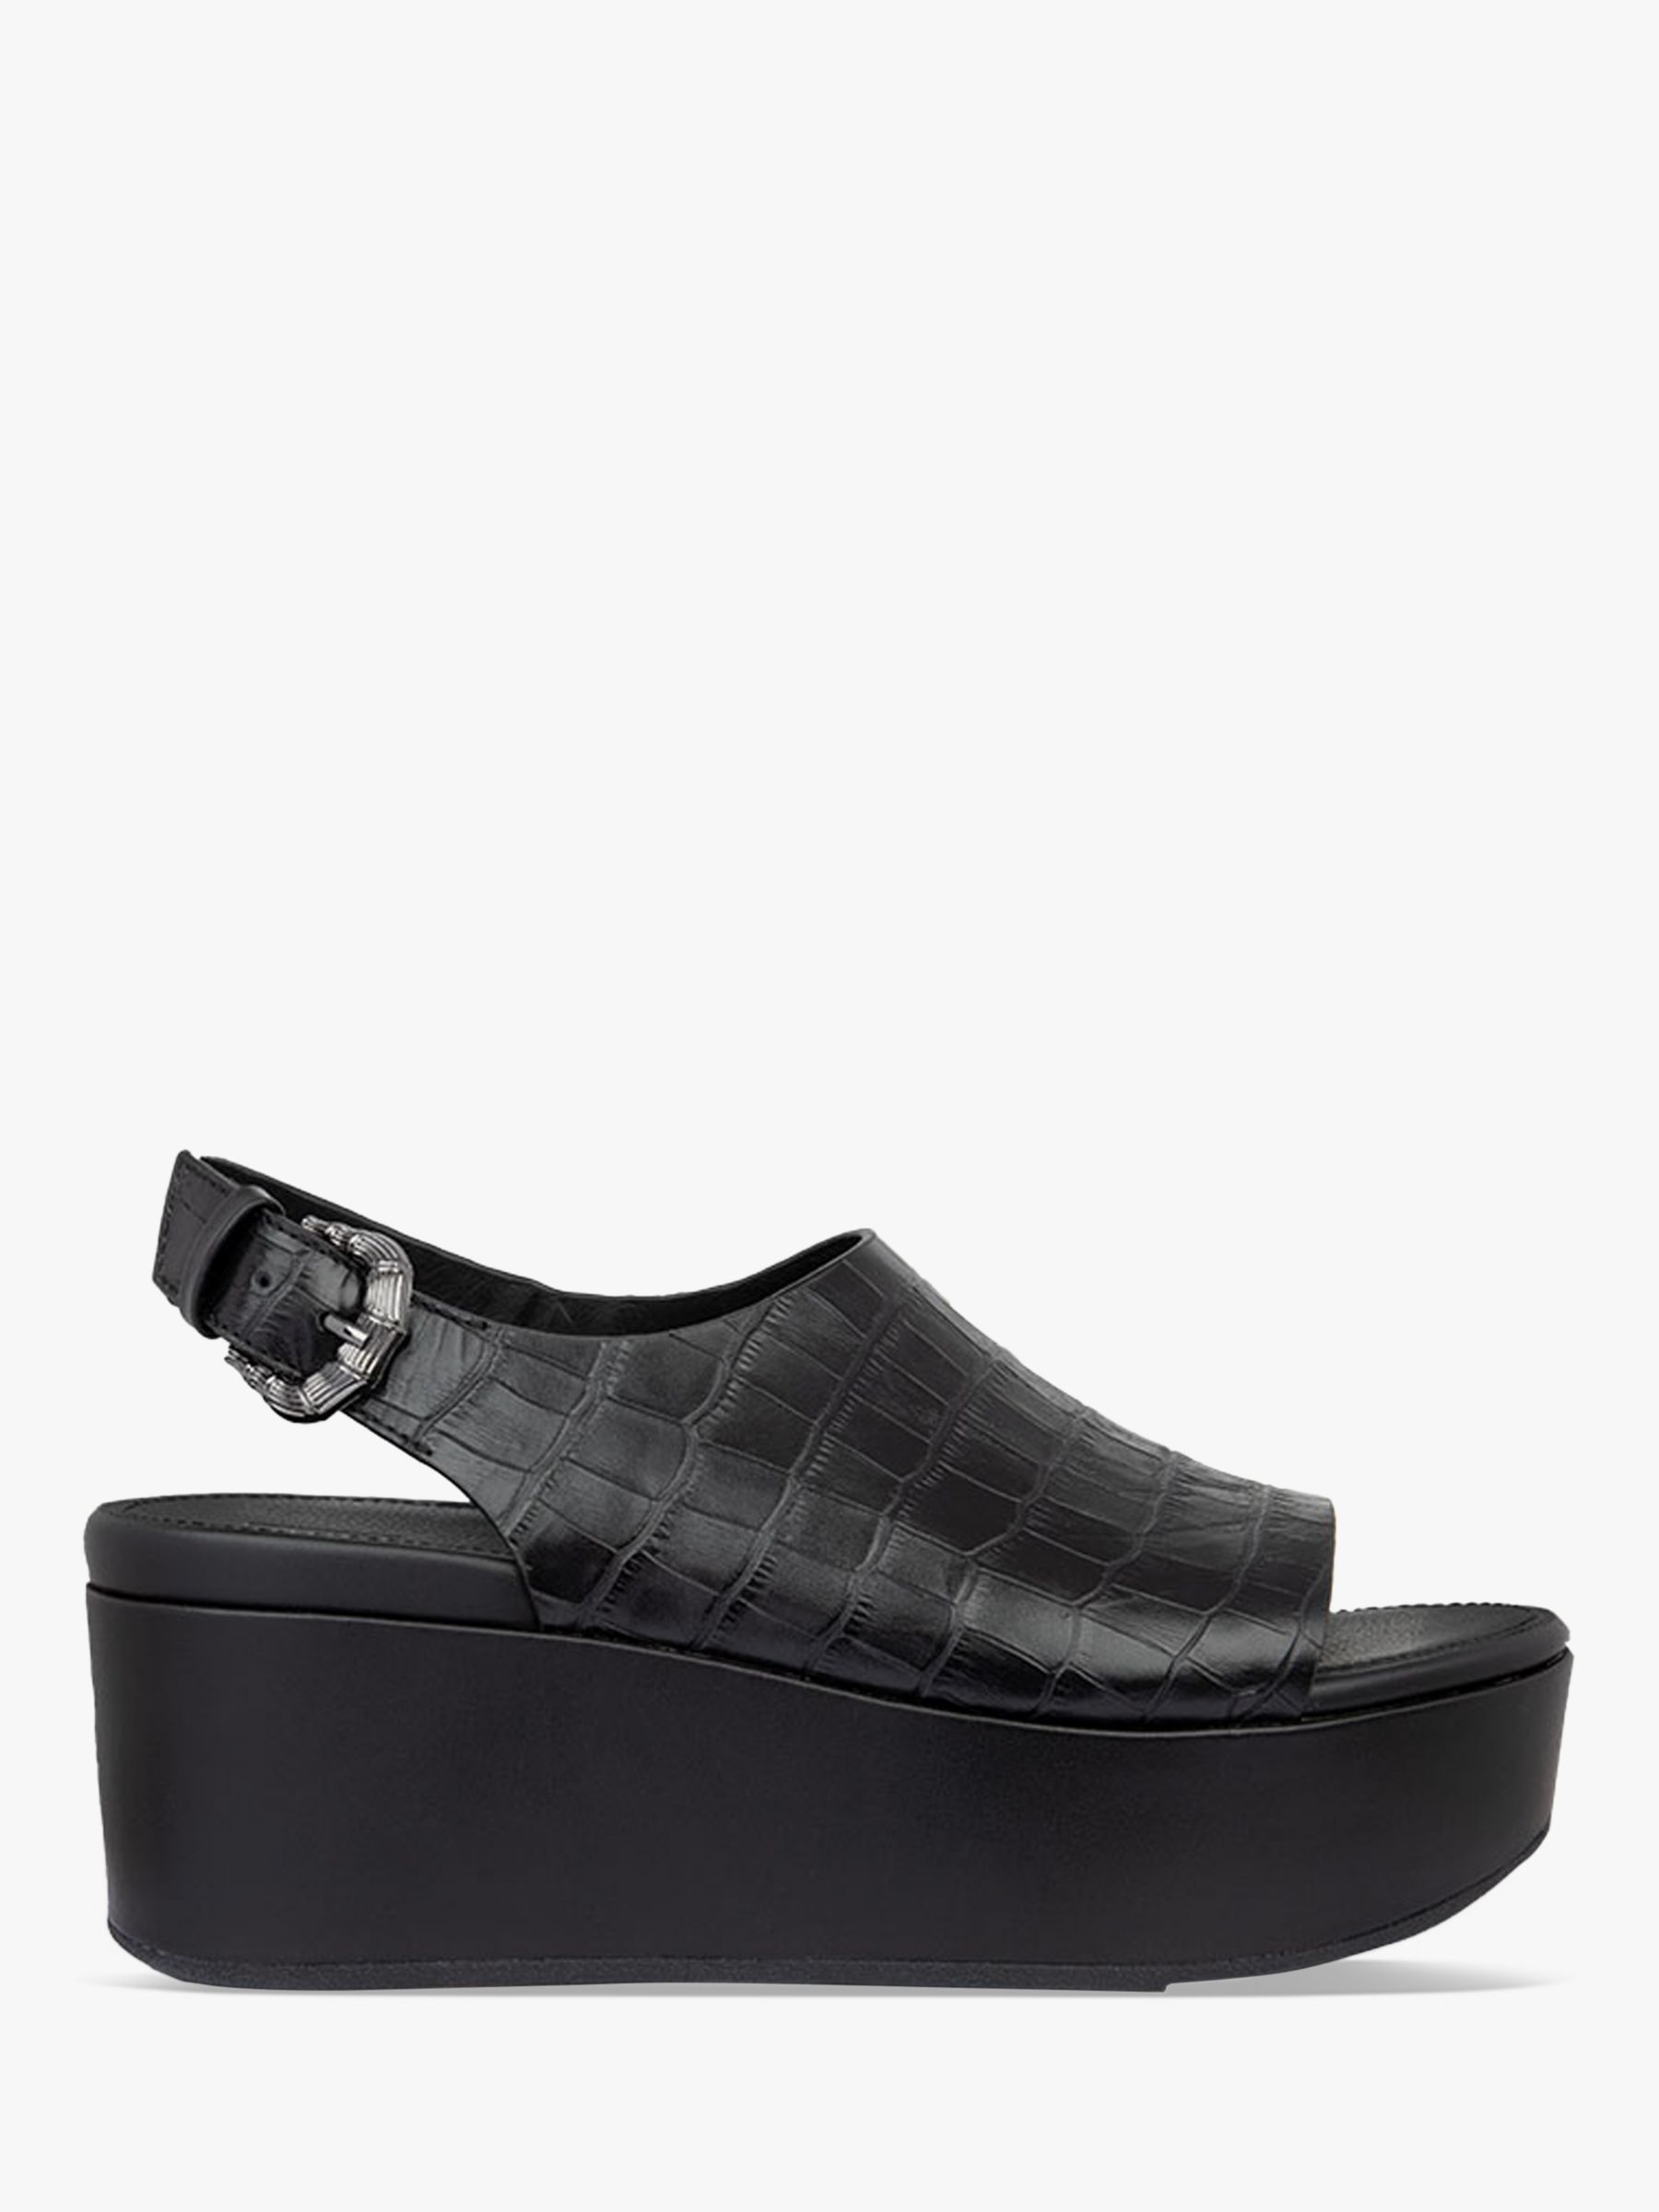 FitFlop Eloise Croc Print Leather Wedge Sandals, Black at John Lewis ...